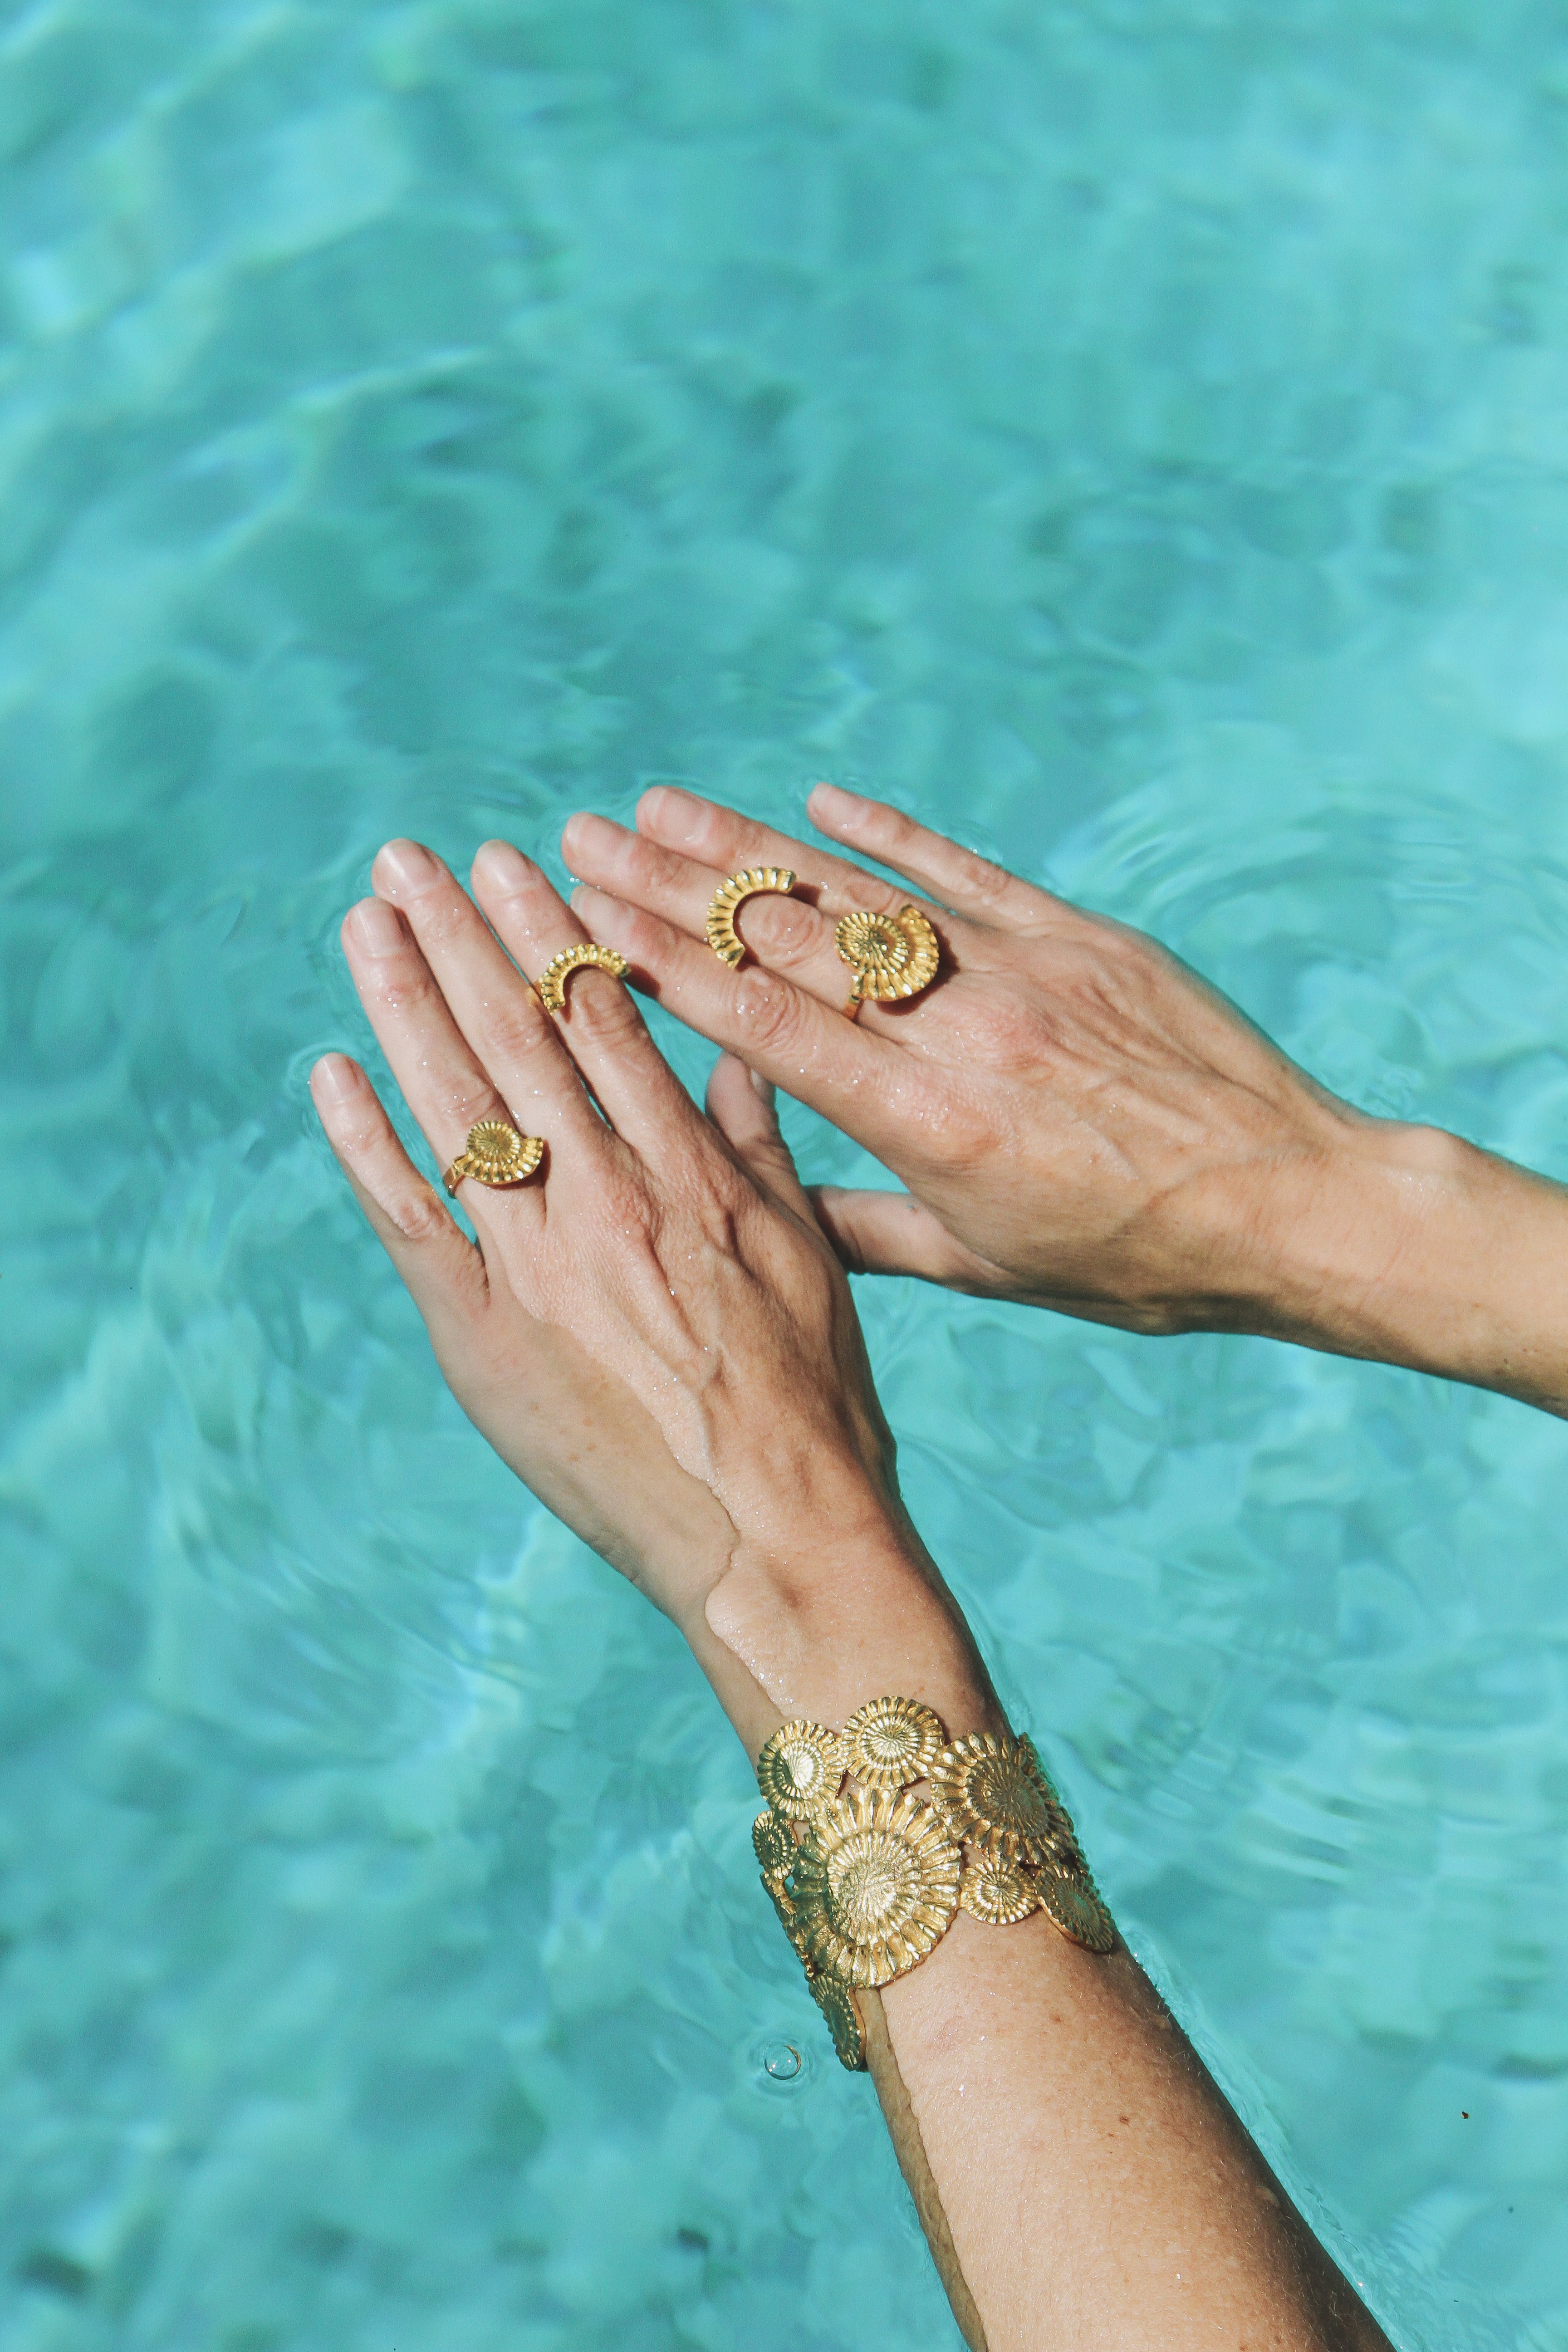 hands in pool wearing sophie simone designs rings and bracelet